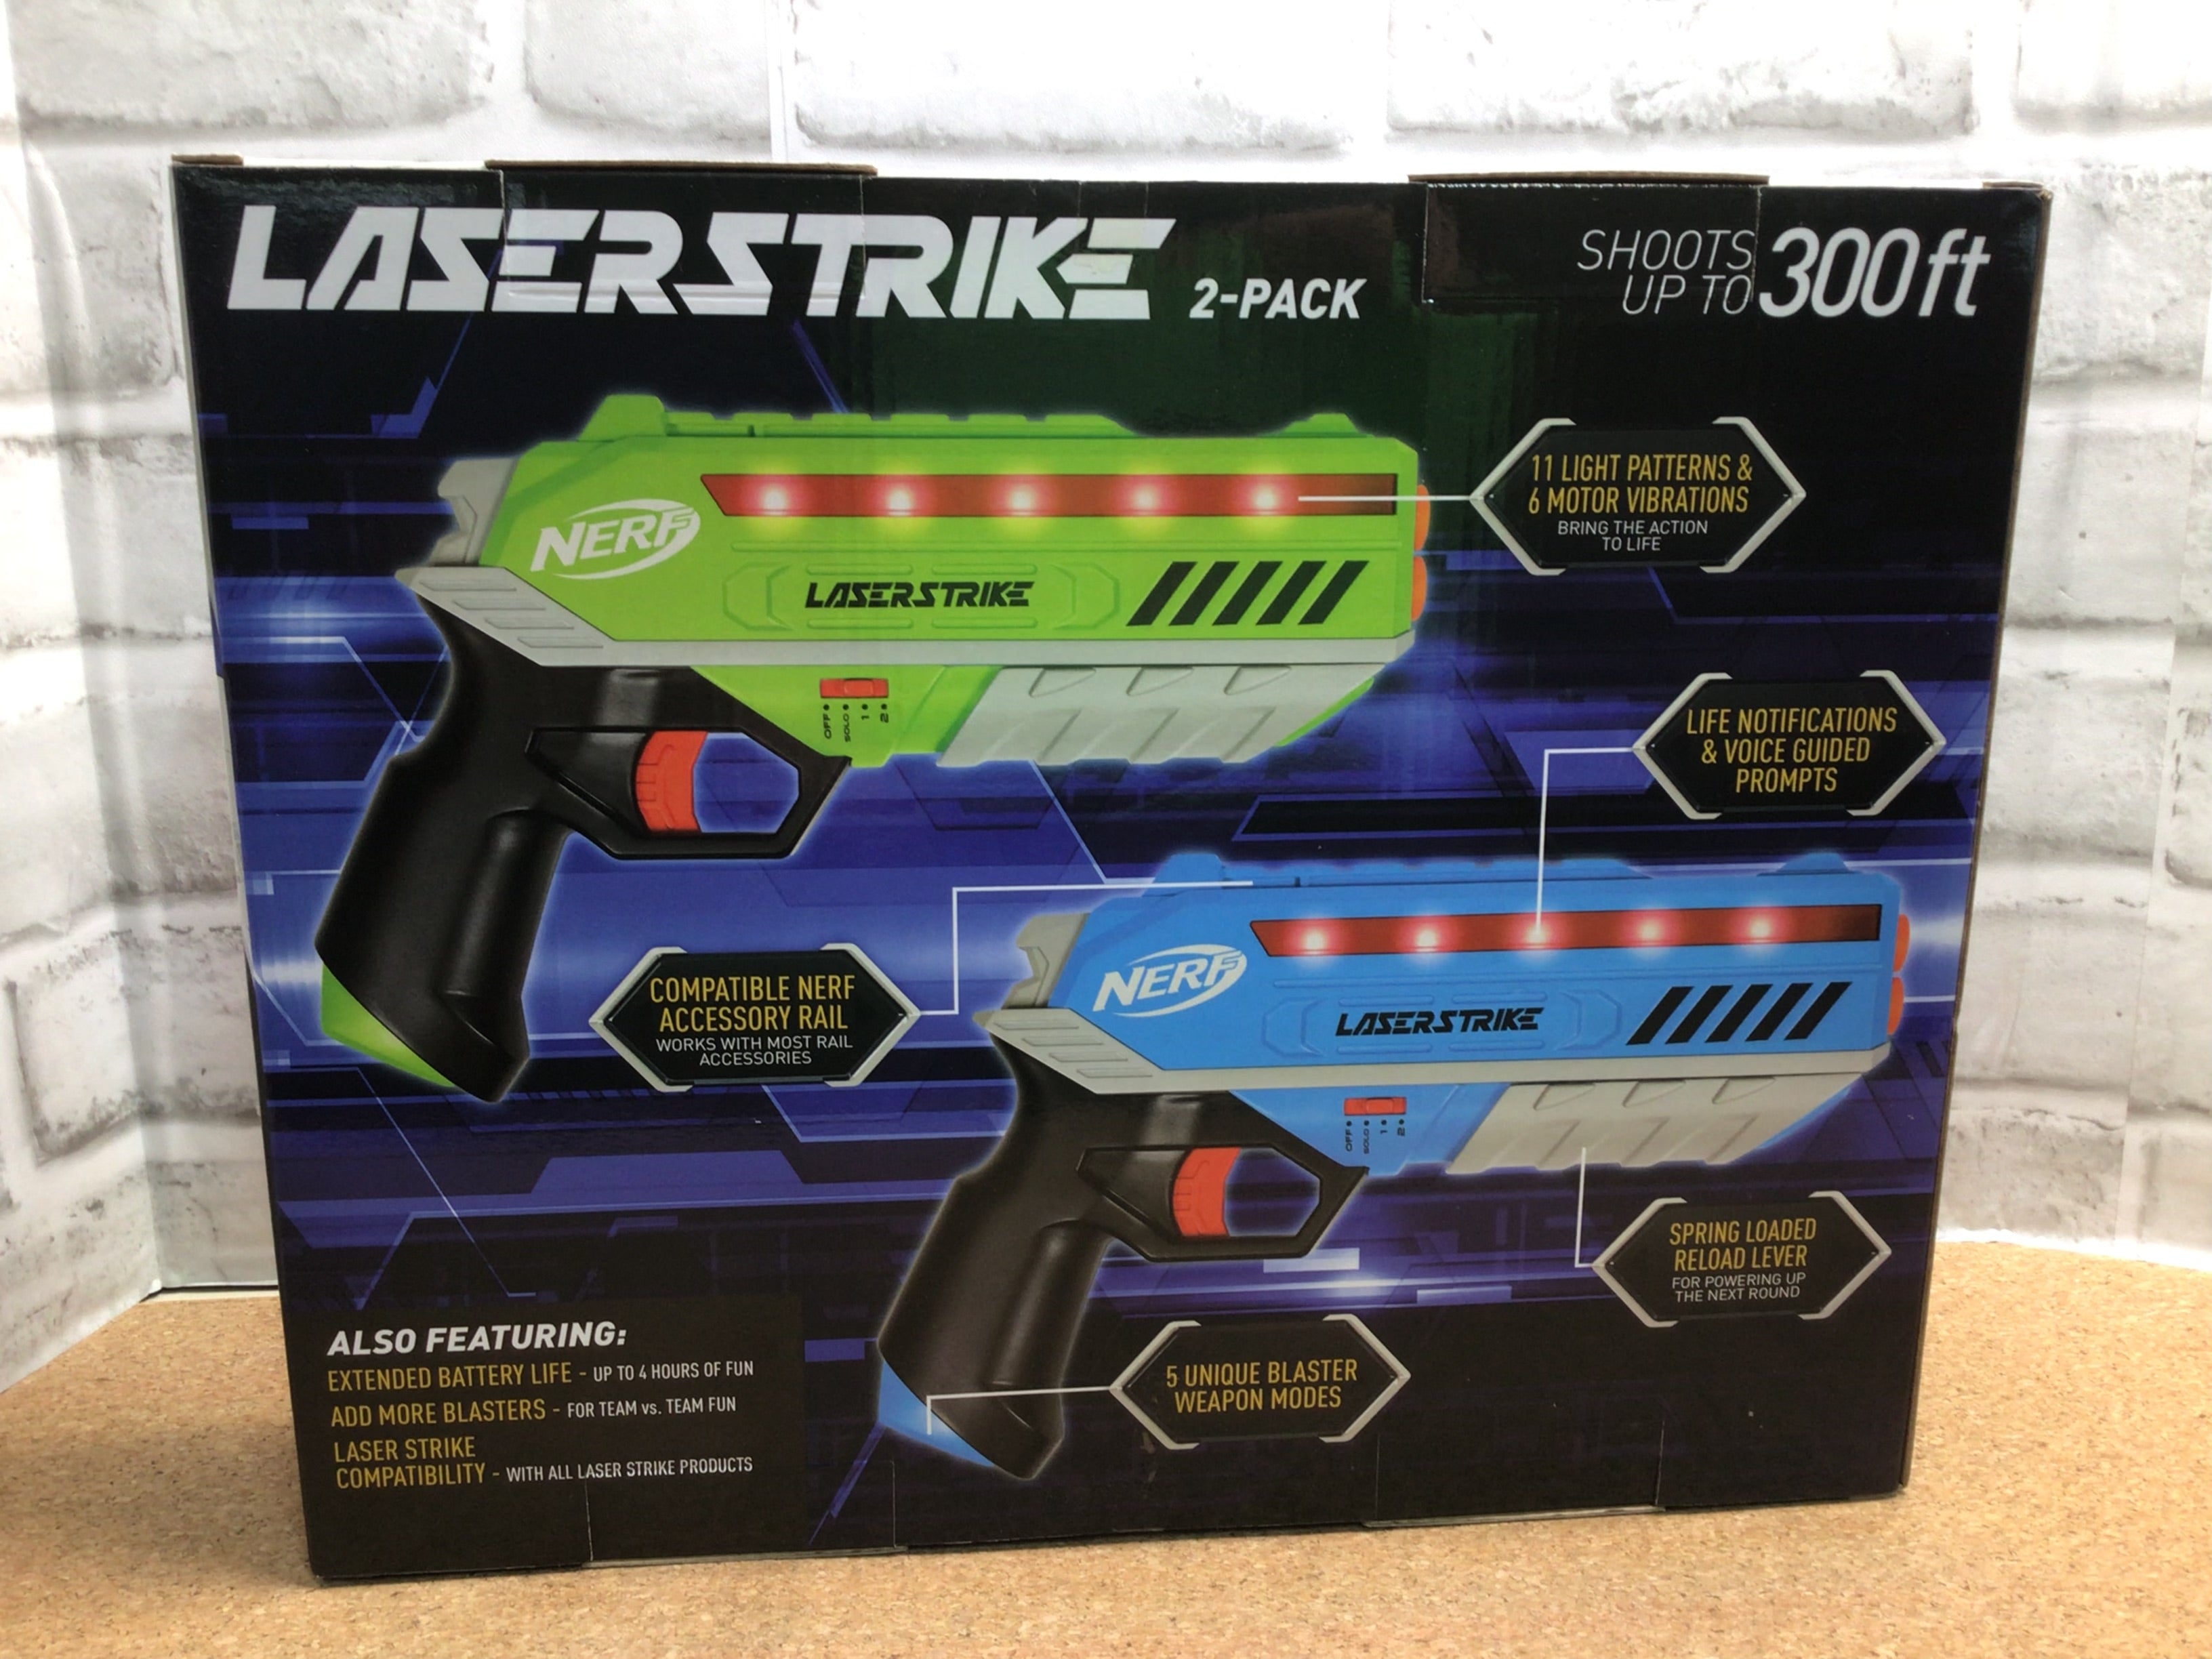 NERF Laser Strike 2-Pack**Lot of 3 connectable Laser guns. A total of 6 guns.** (7931091878126)